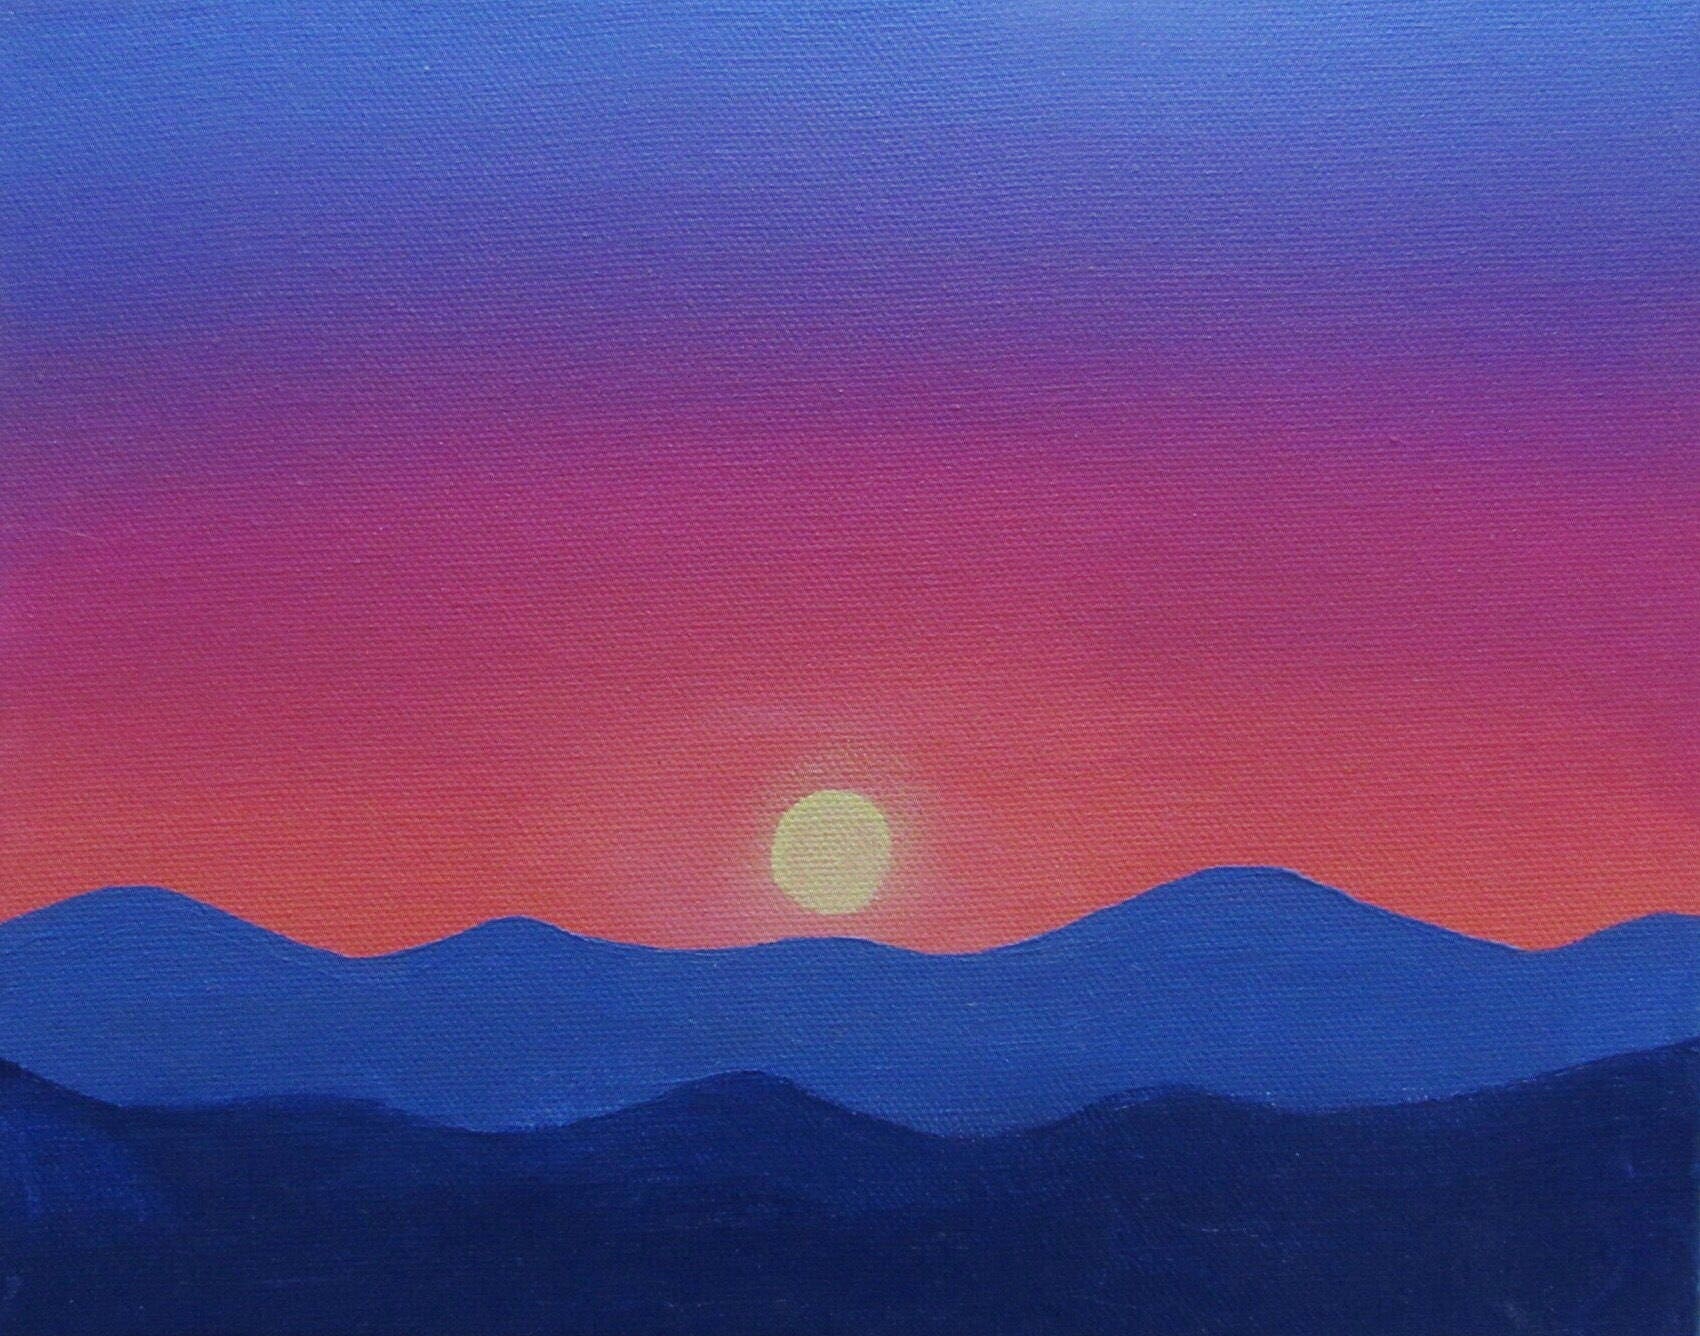 10x8 Acrylic on Canvas Mountain Sunrise Painting Small Wall Decor Original Art Blue Pink Purple Tennessee Landscape